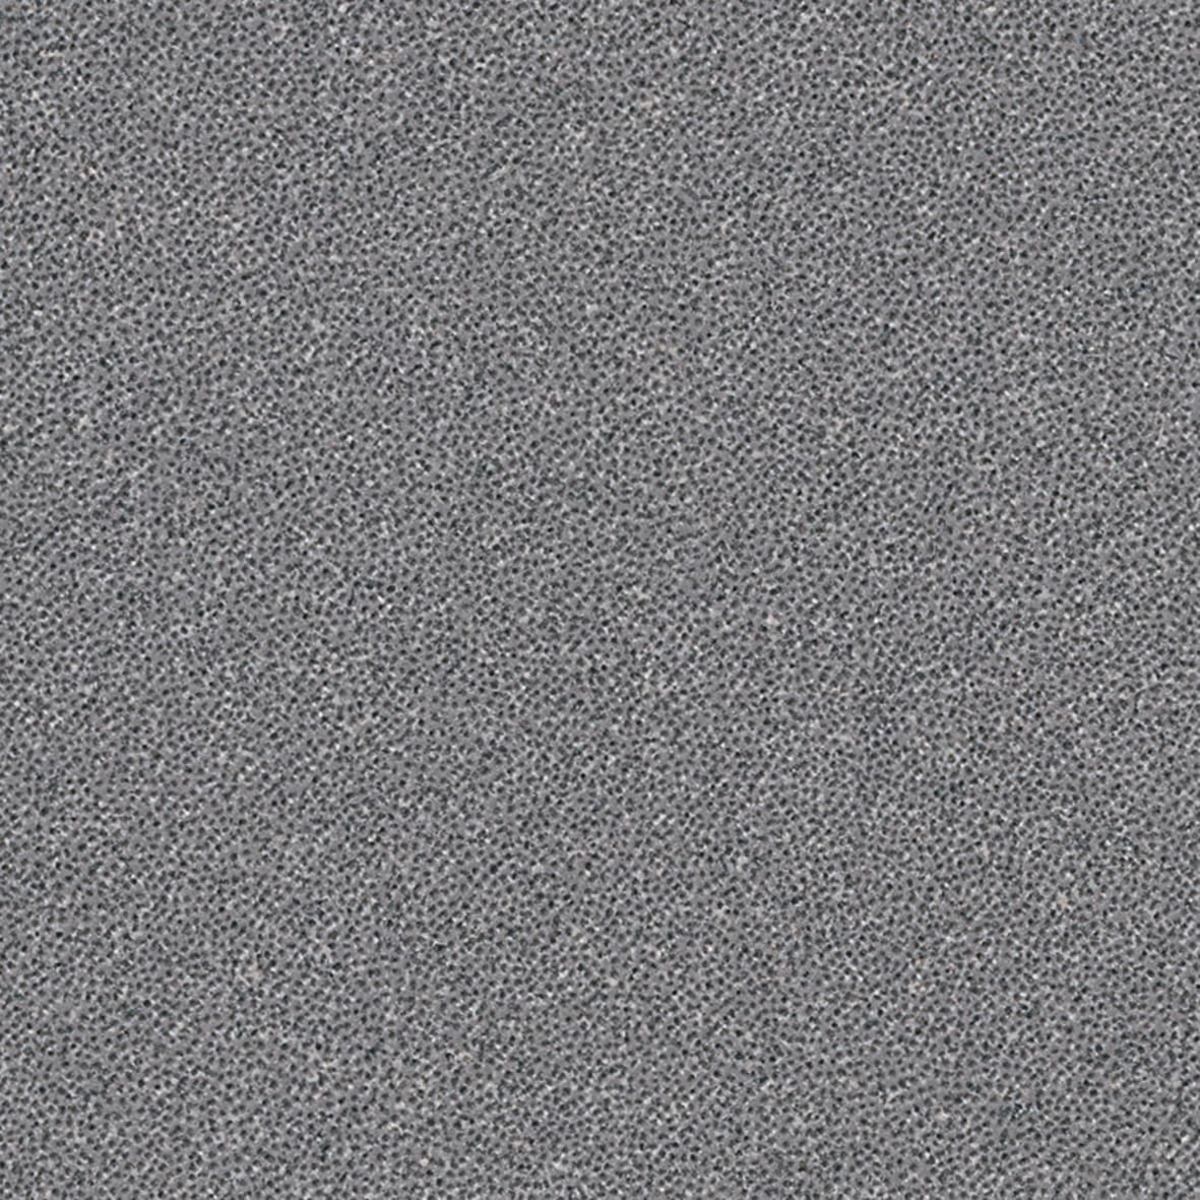 Dlažba Rako Taurus Granit antracitově šedá 20x20 cm protiskluz TRM25065.1 Rako